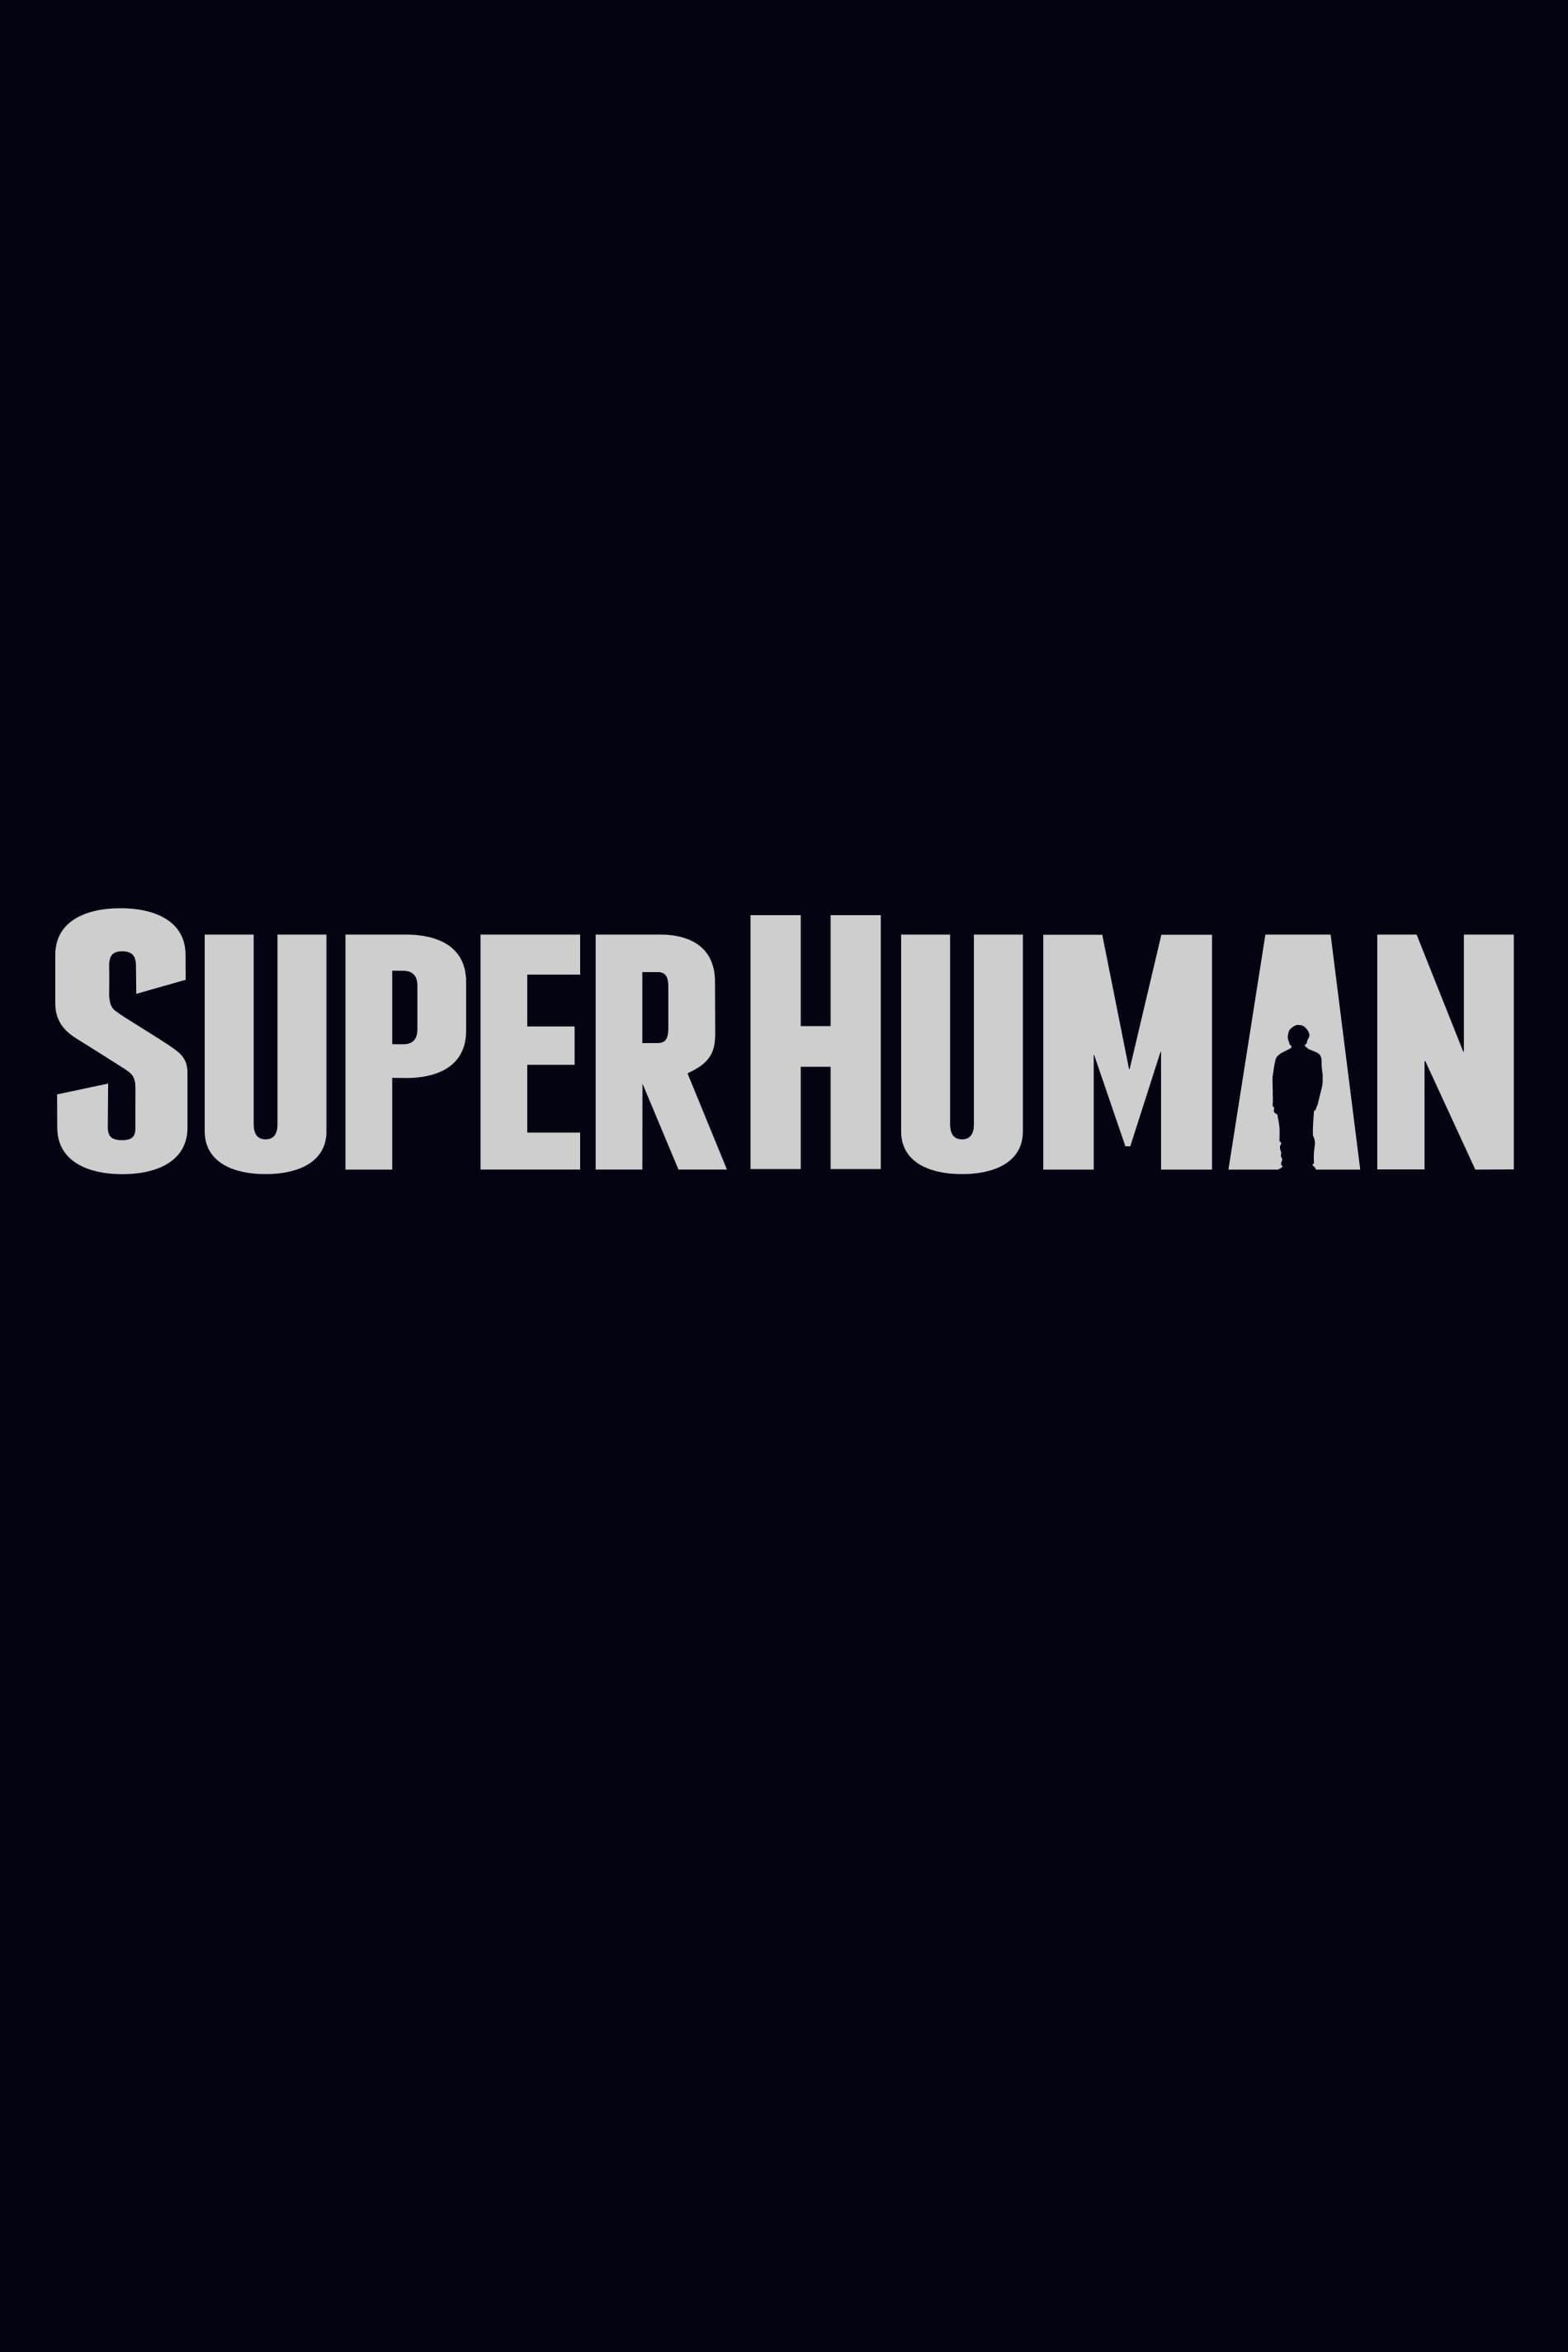 Superhuman poster